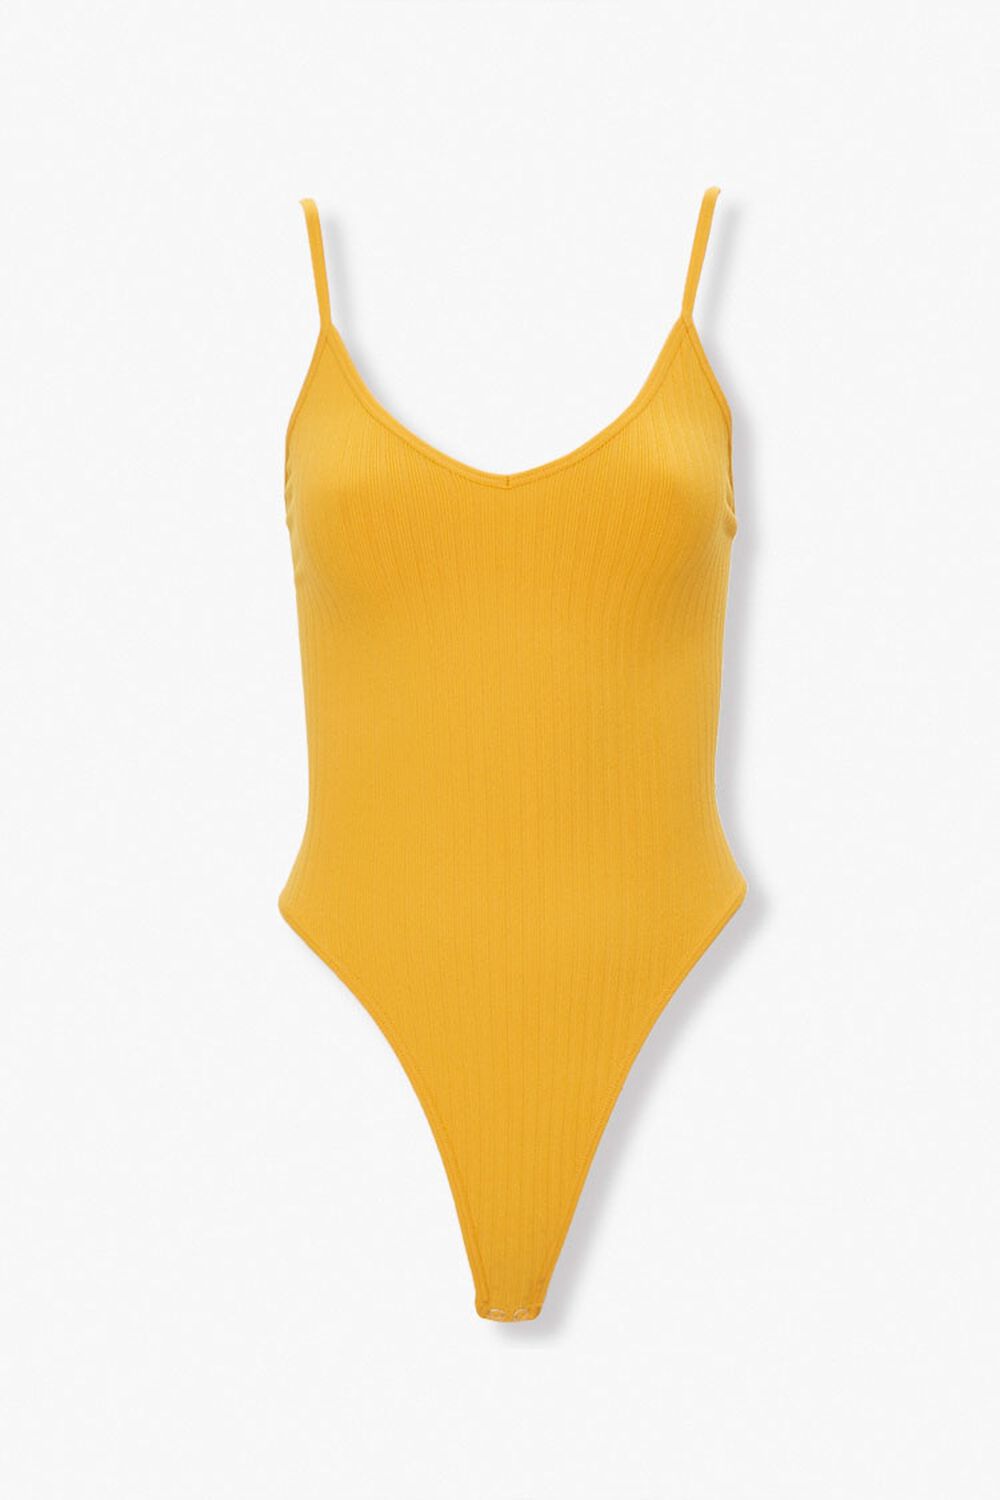 YELLOW Ribbed Seamless Thong Bodysuit, image 1